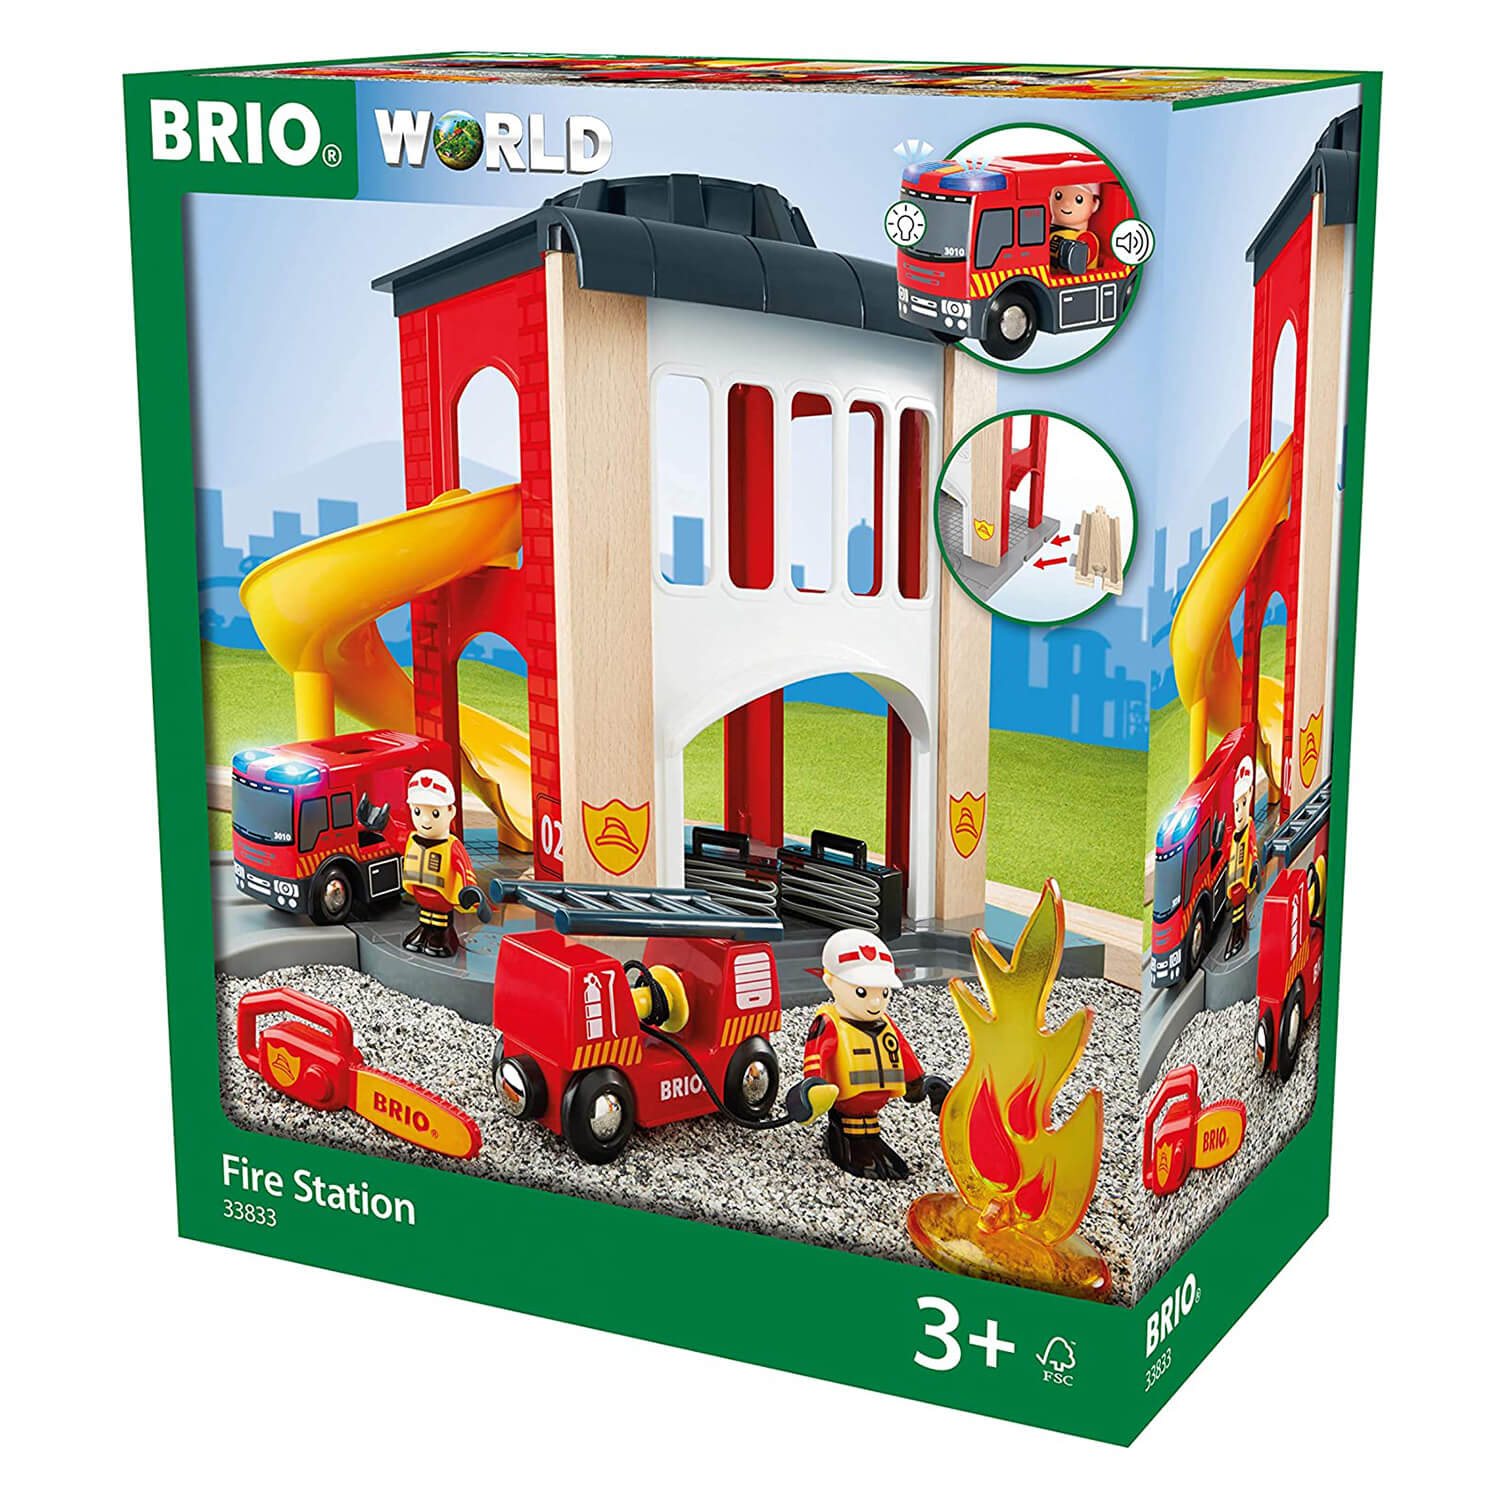 Brio Central Fire Station